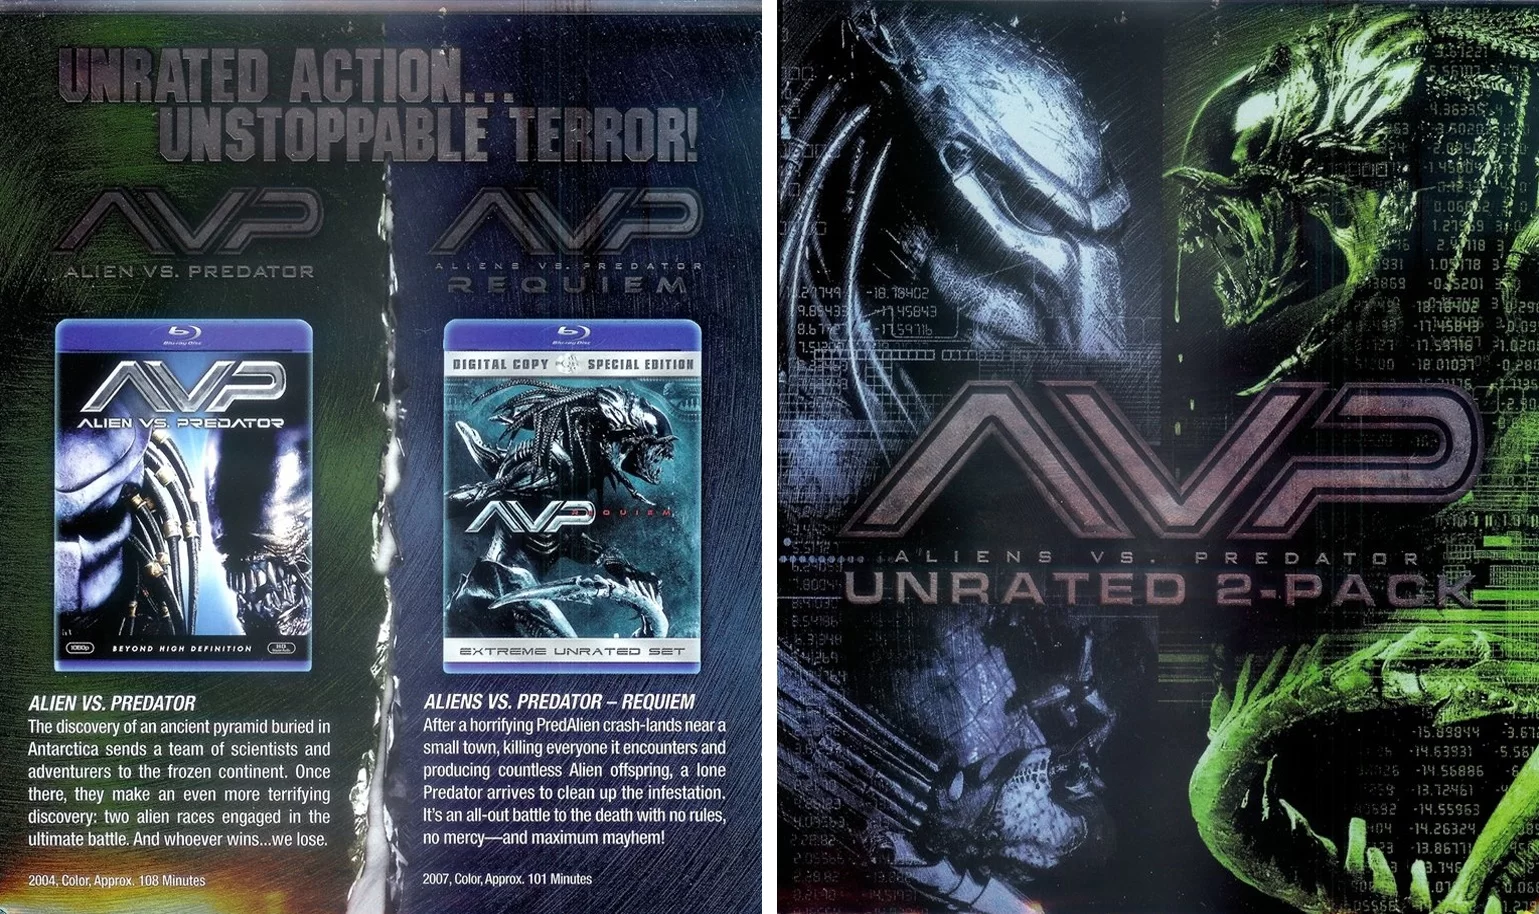  AVP: Alien Vs. Predator - The Unrated Edition